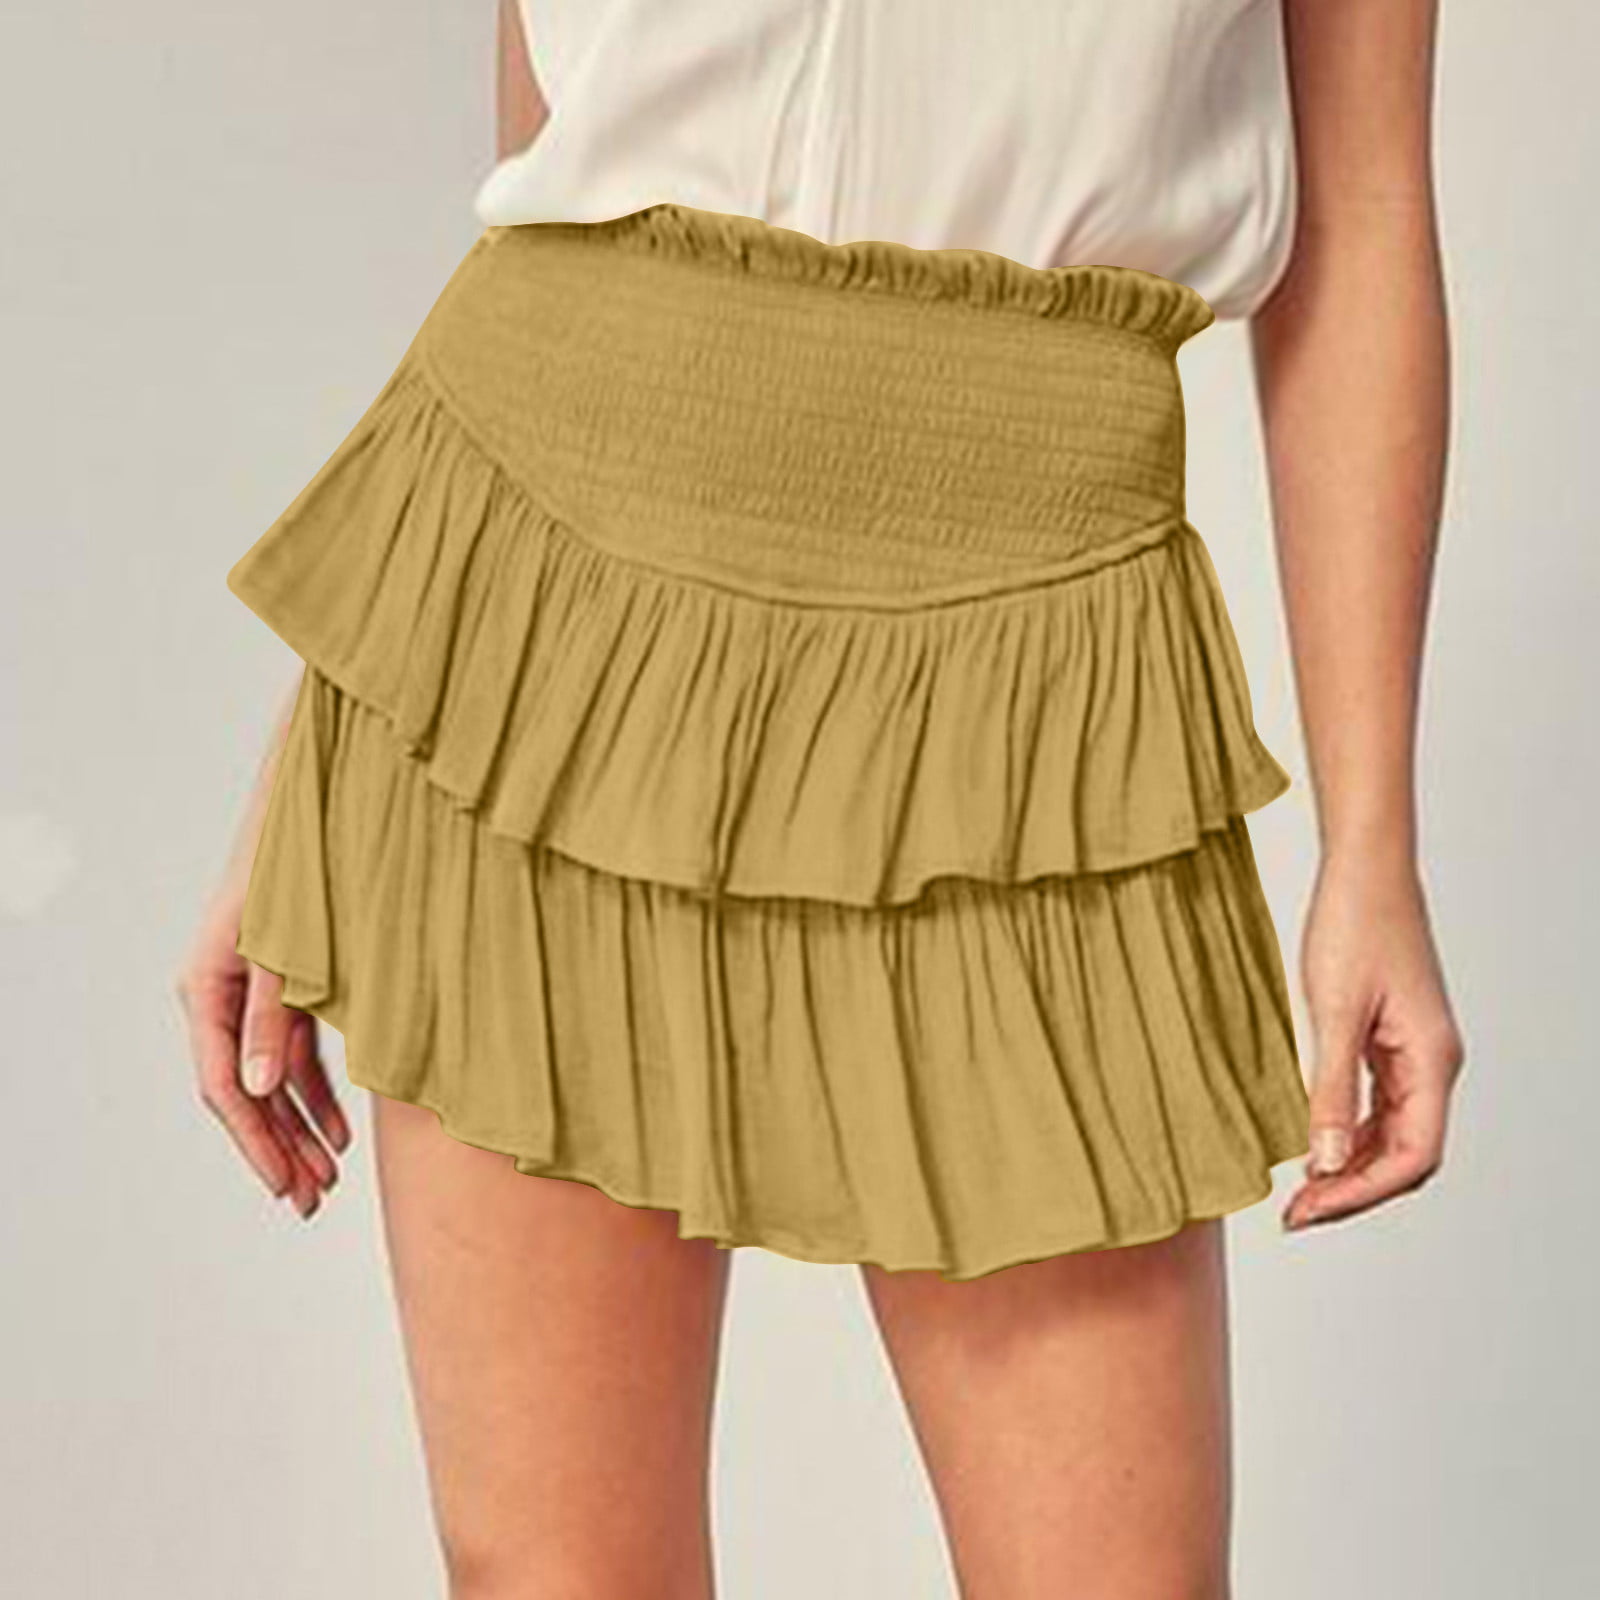 Summer Lady Chiffon Pleated Half Pants WideLeg Shorts Half Culottes Skirt  Pants  eBay